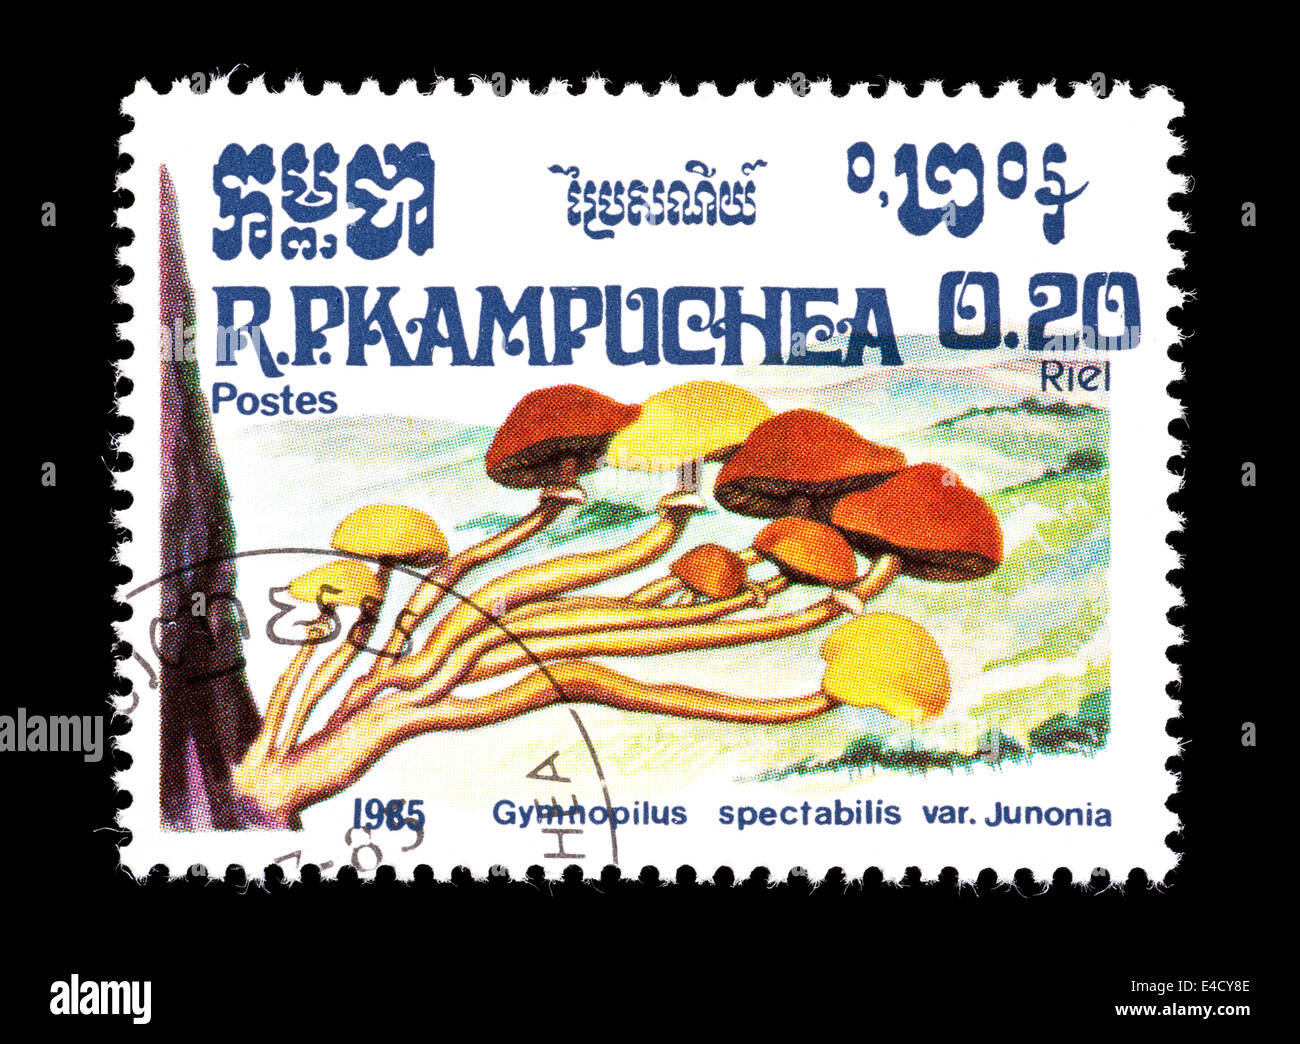 Postage stamp from Kampuchea (Cambodia) depicting laughing Jim, or spectacular rustgill mushrooms (Gymnopilus junonius) Stock Photo